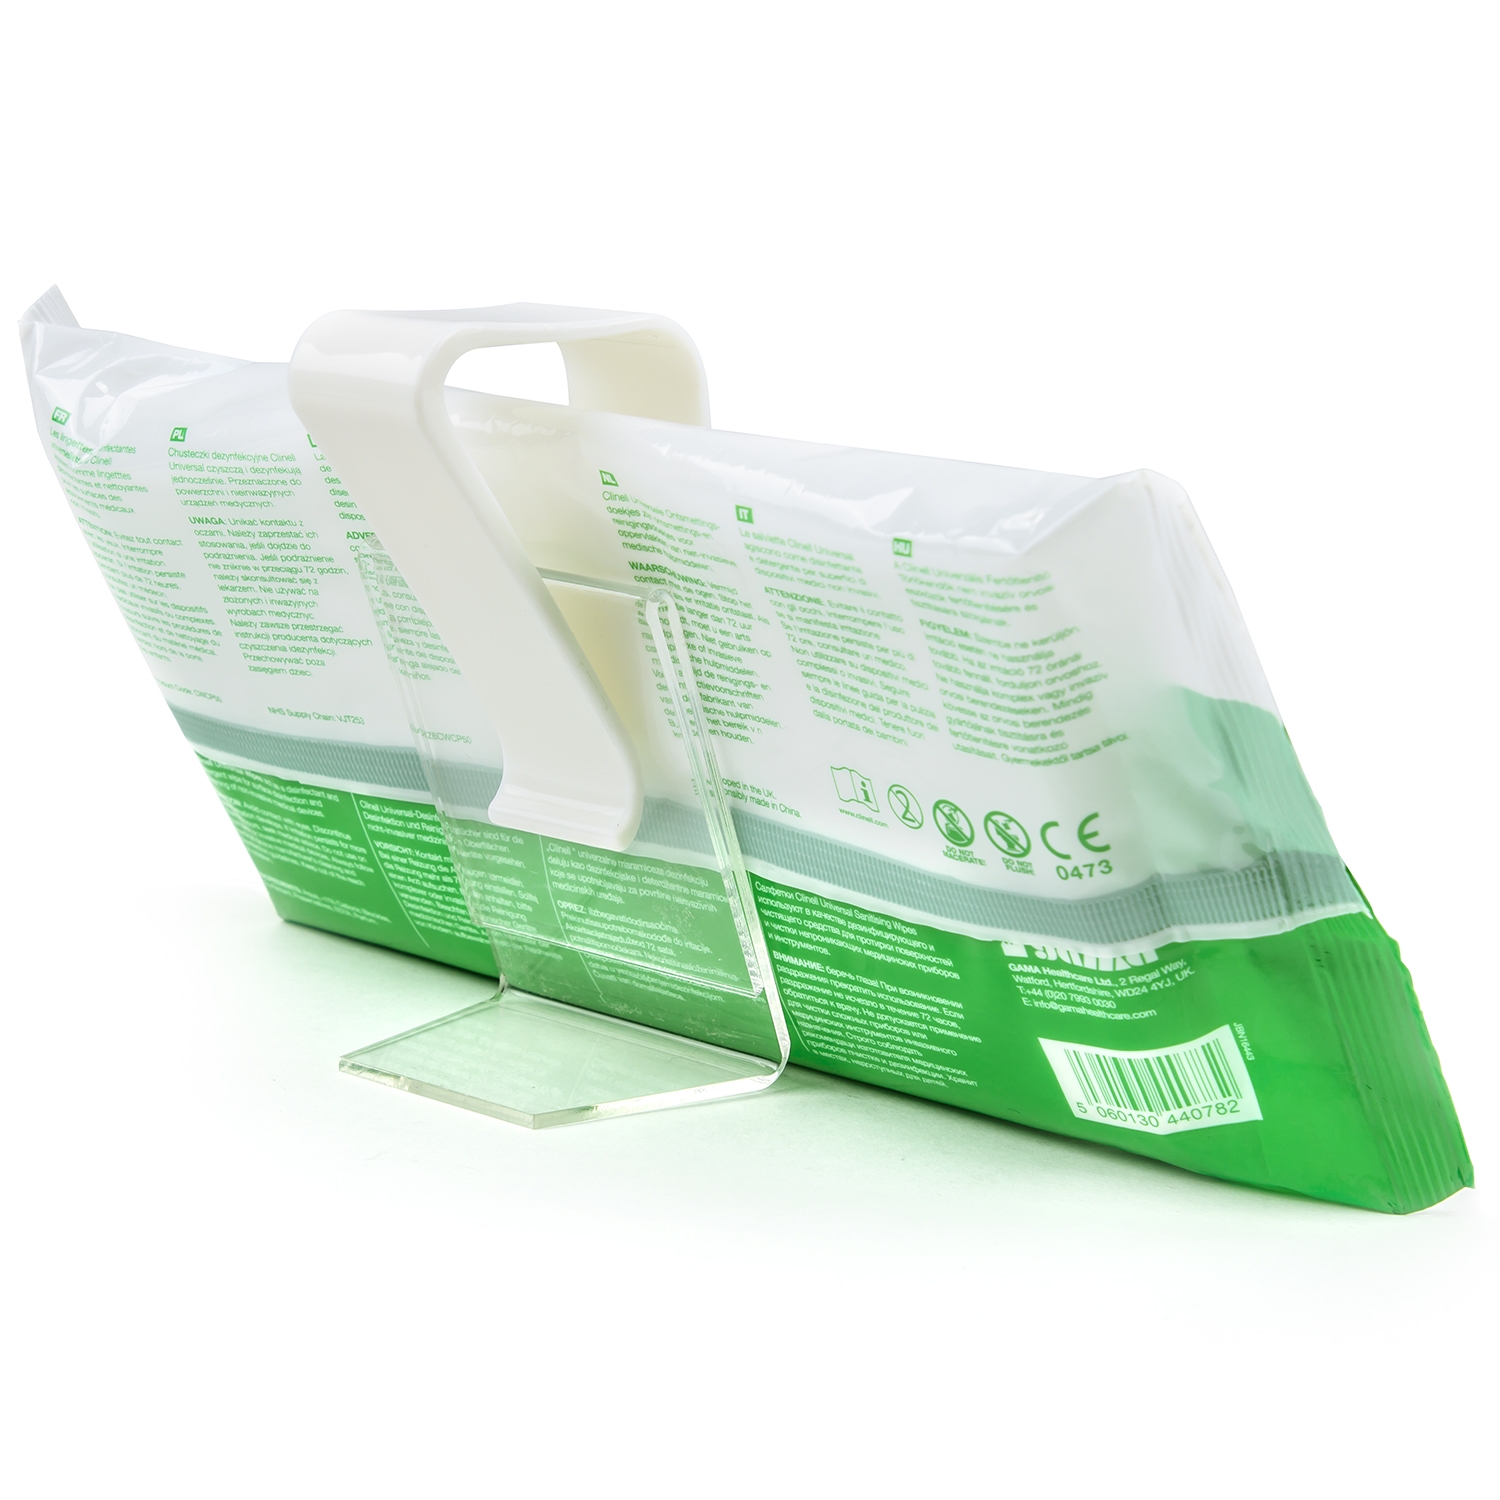 Clinell desinfectiedoekjes medische oppervlakken - alcoholvrij - clip mini pack (50 st)